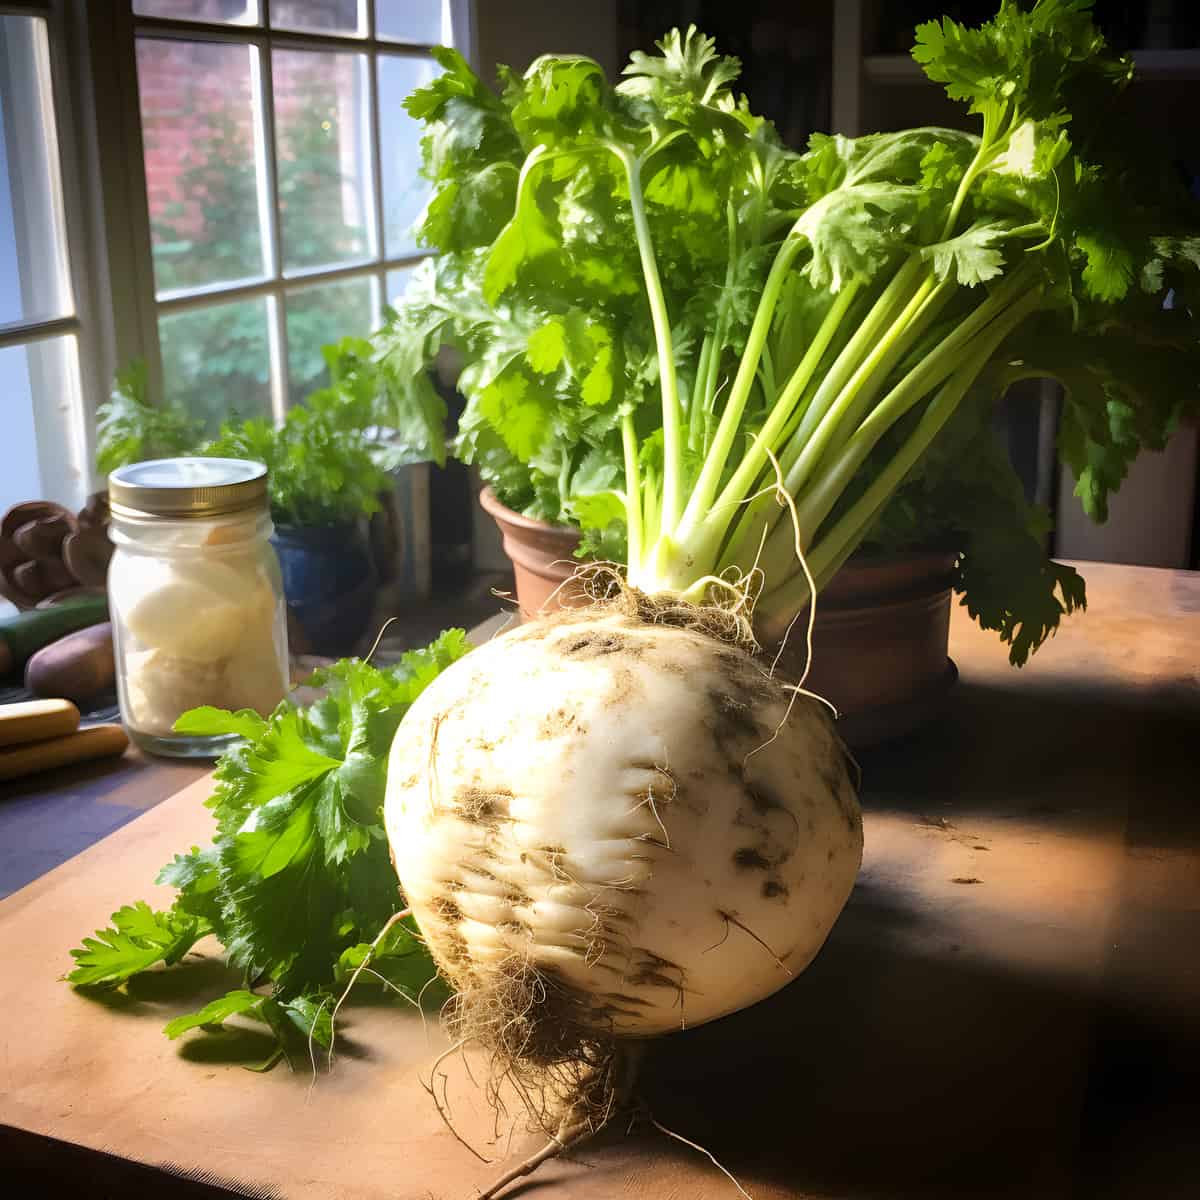 Celeriac on a kitchen counter